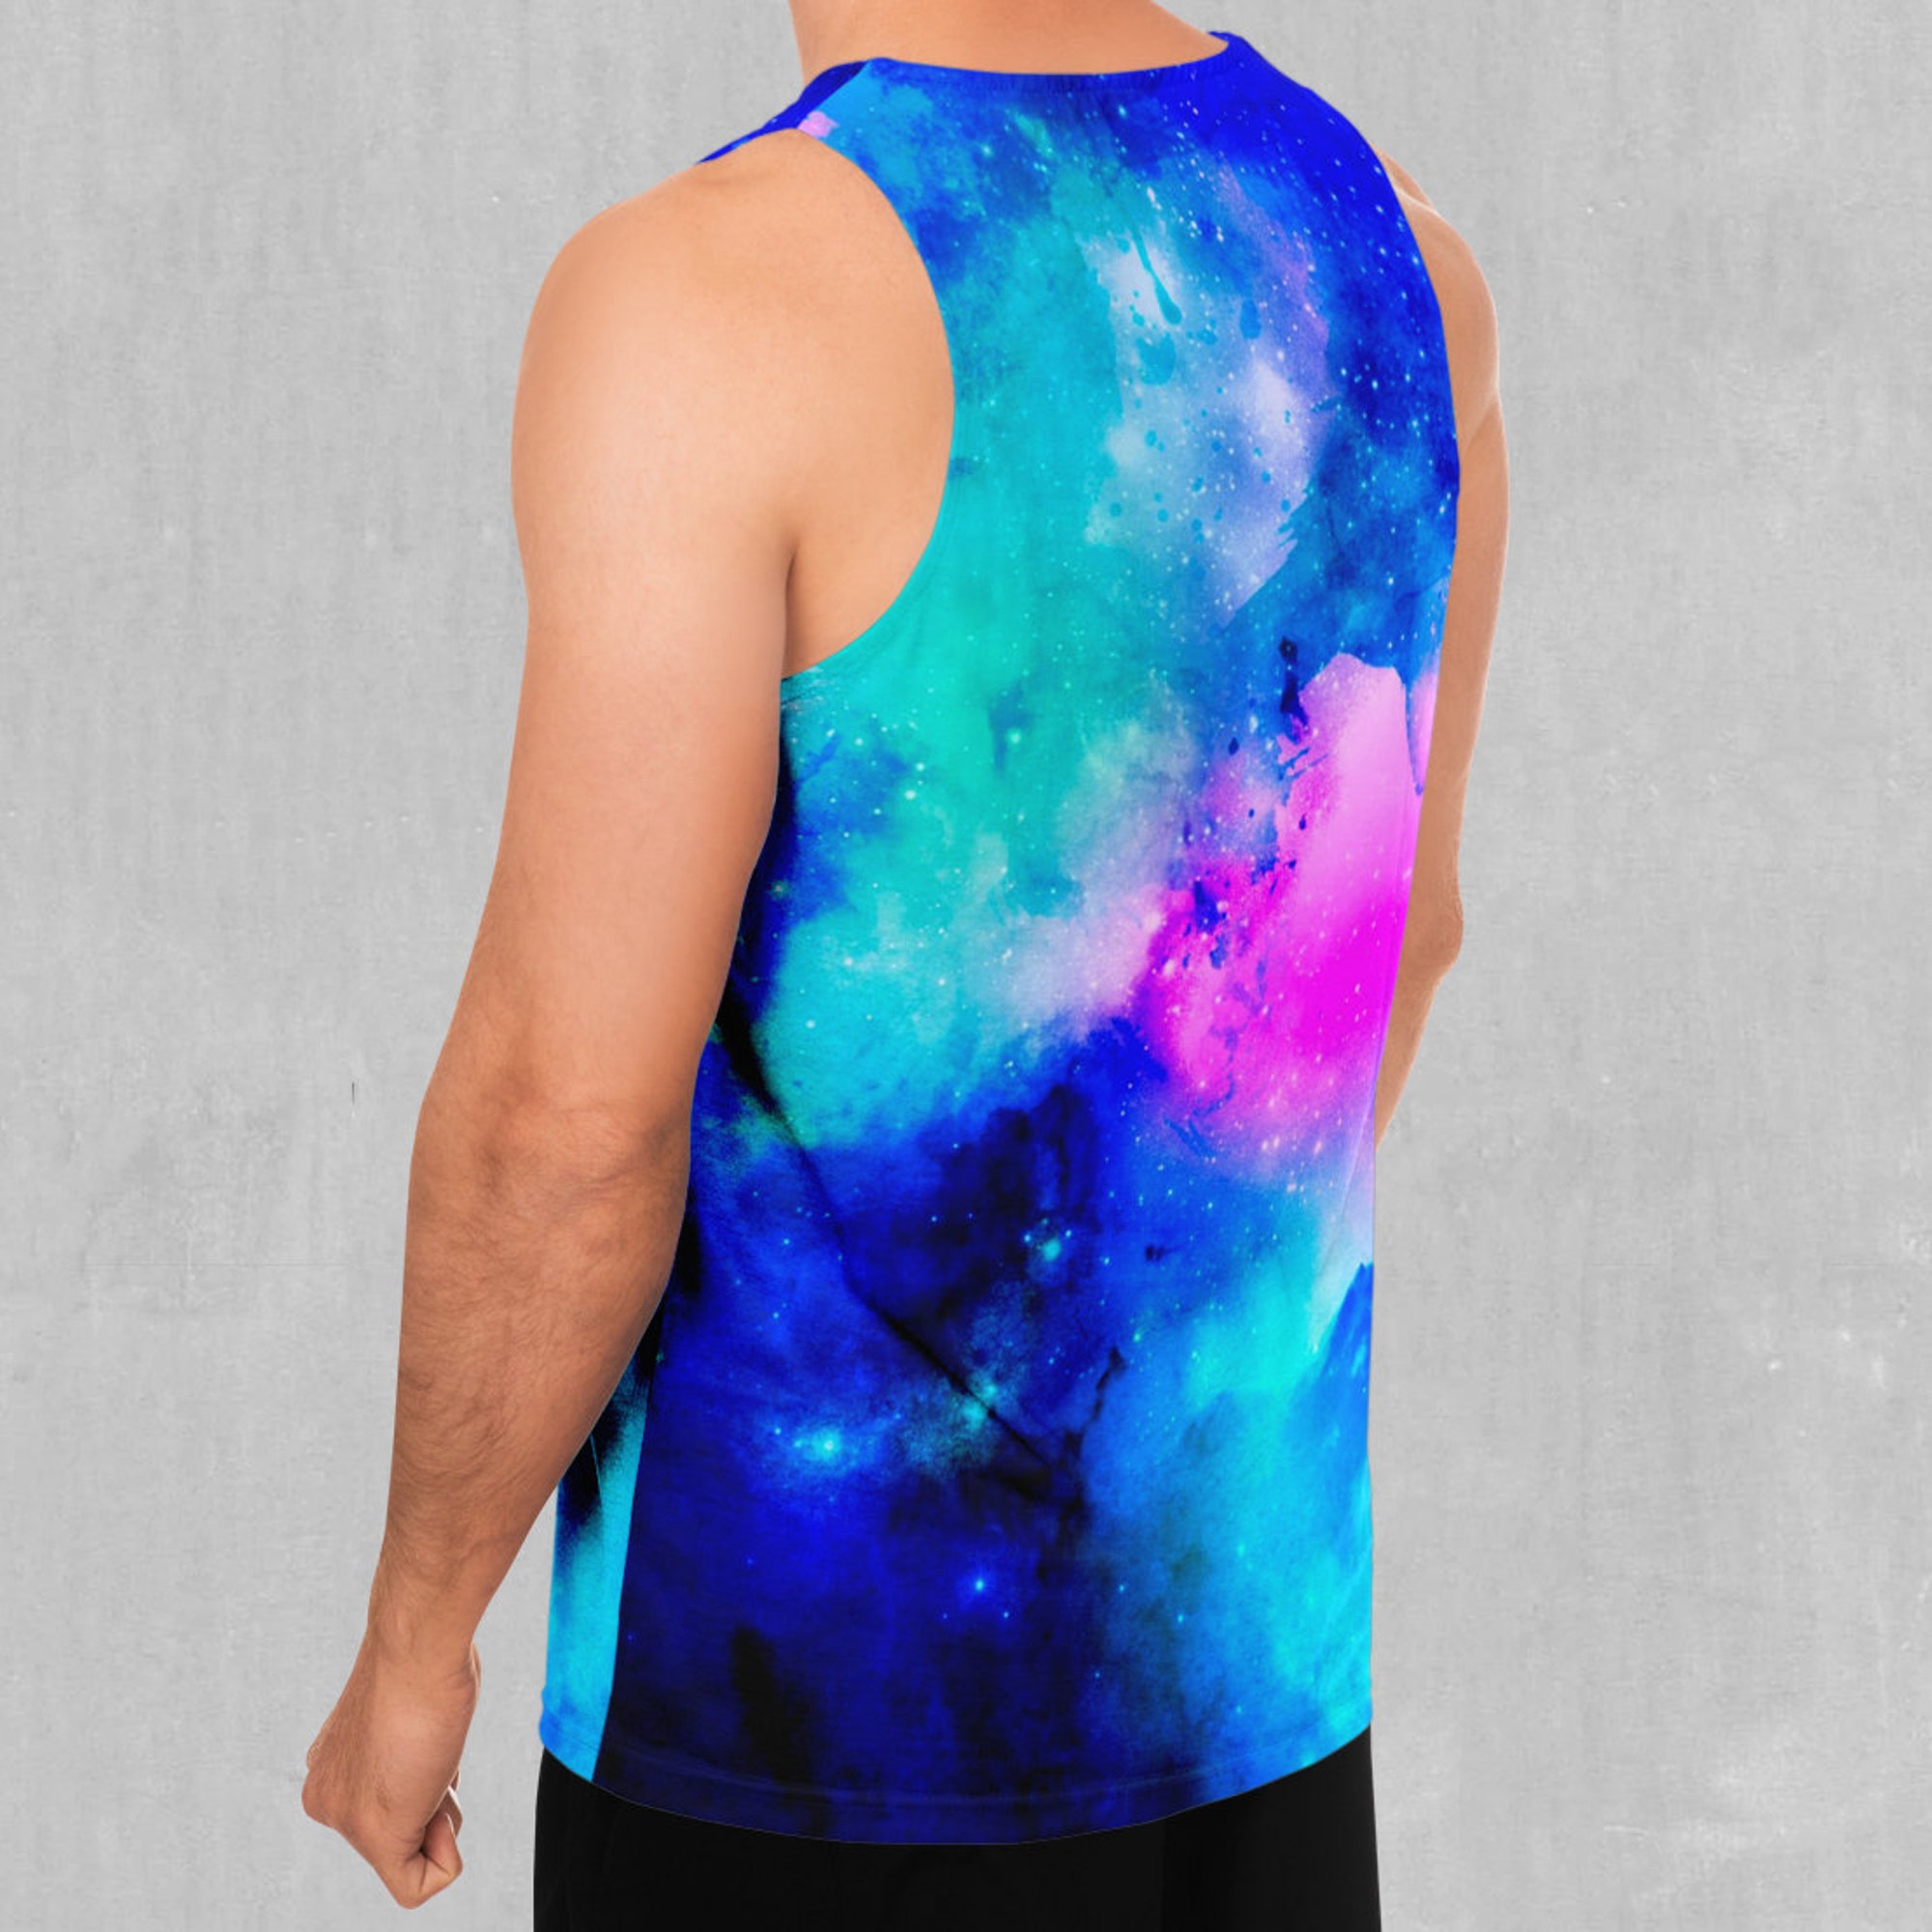 Stellar Skies Galaxy Space Men's Tank Top Muscle Sleeveless Shirt